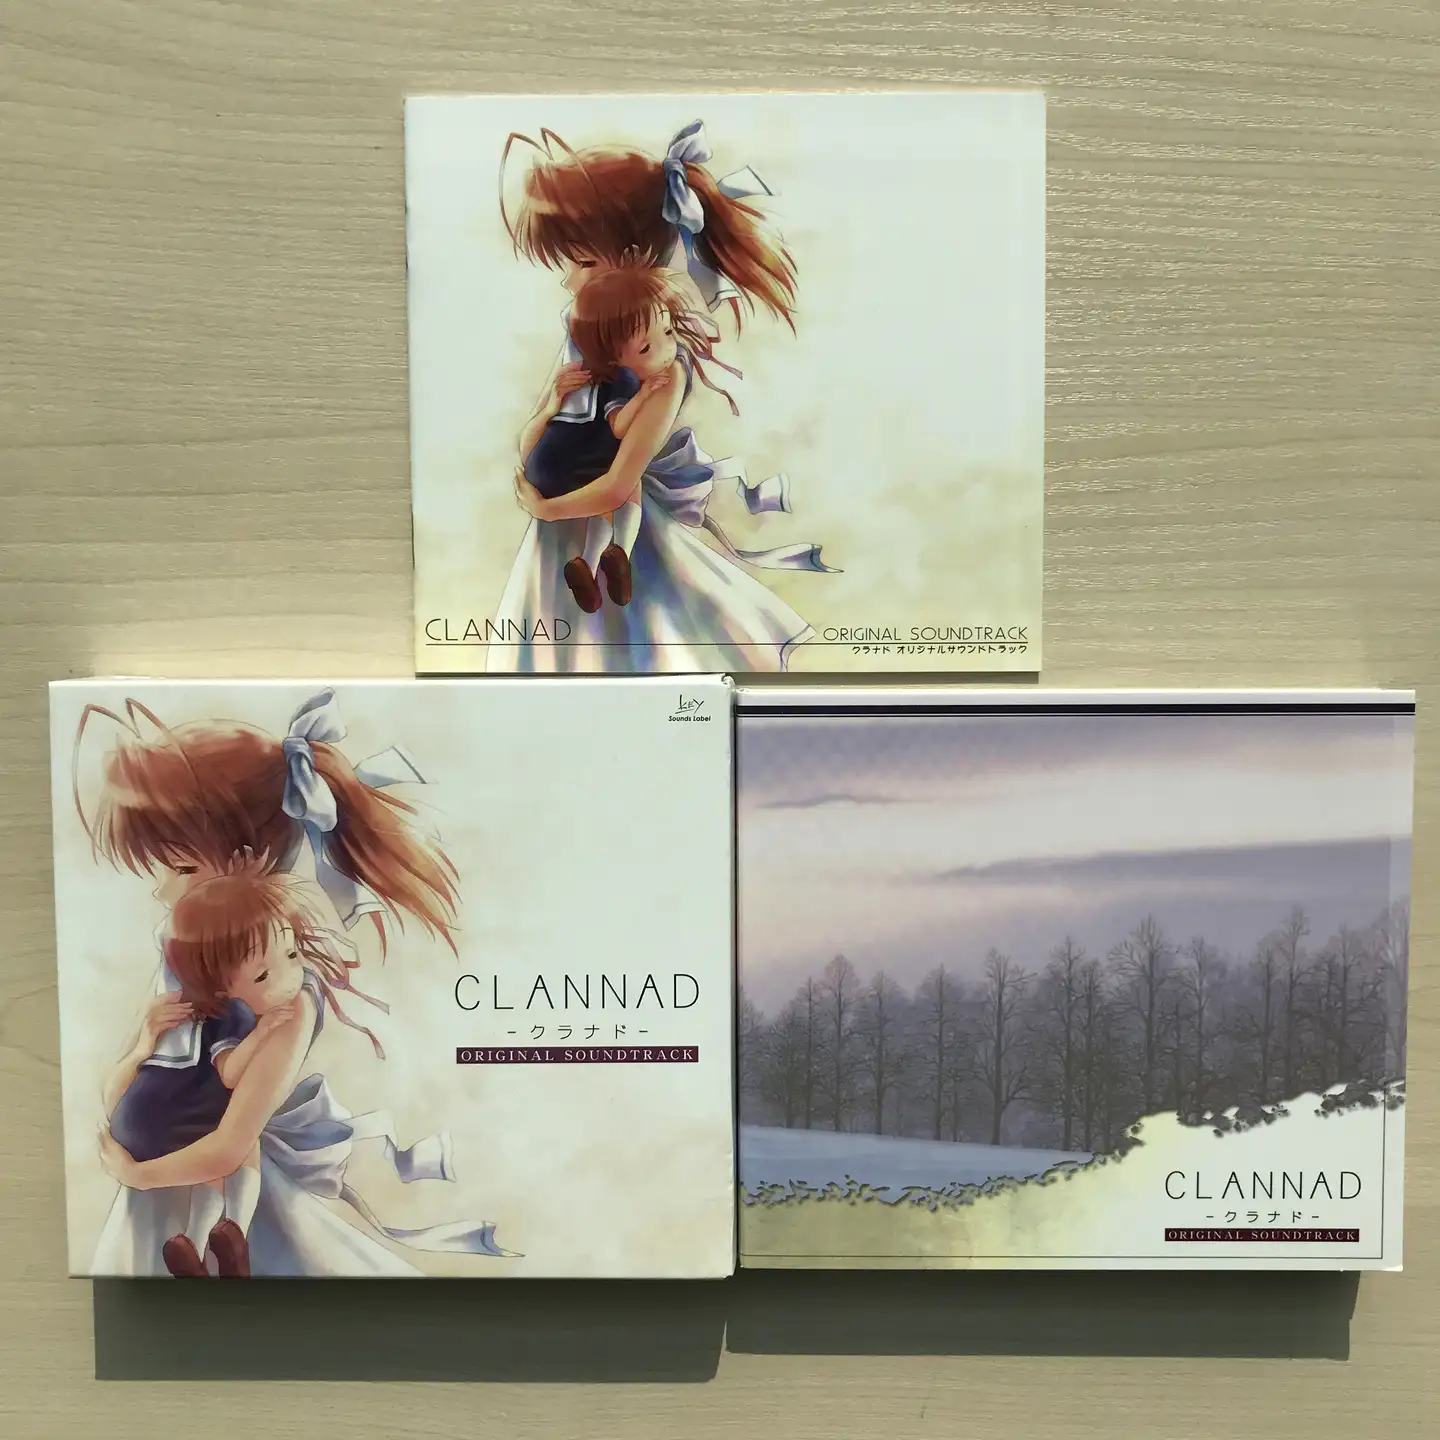 Clannad (Original Soundtrack) - Album by VisualArt's / Key Sounds